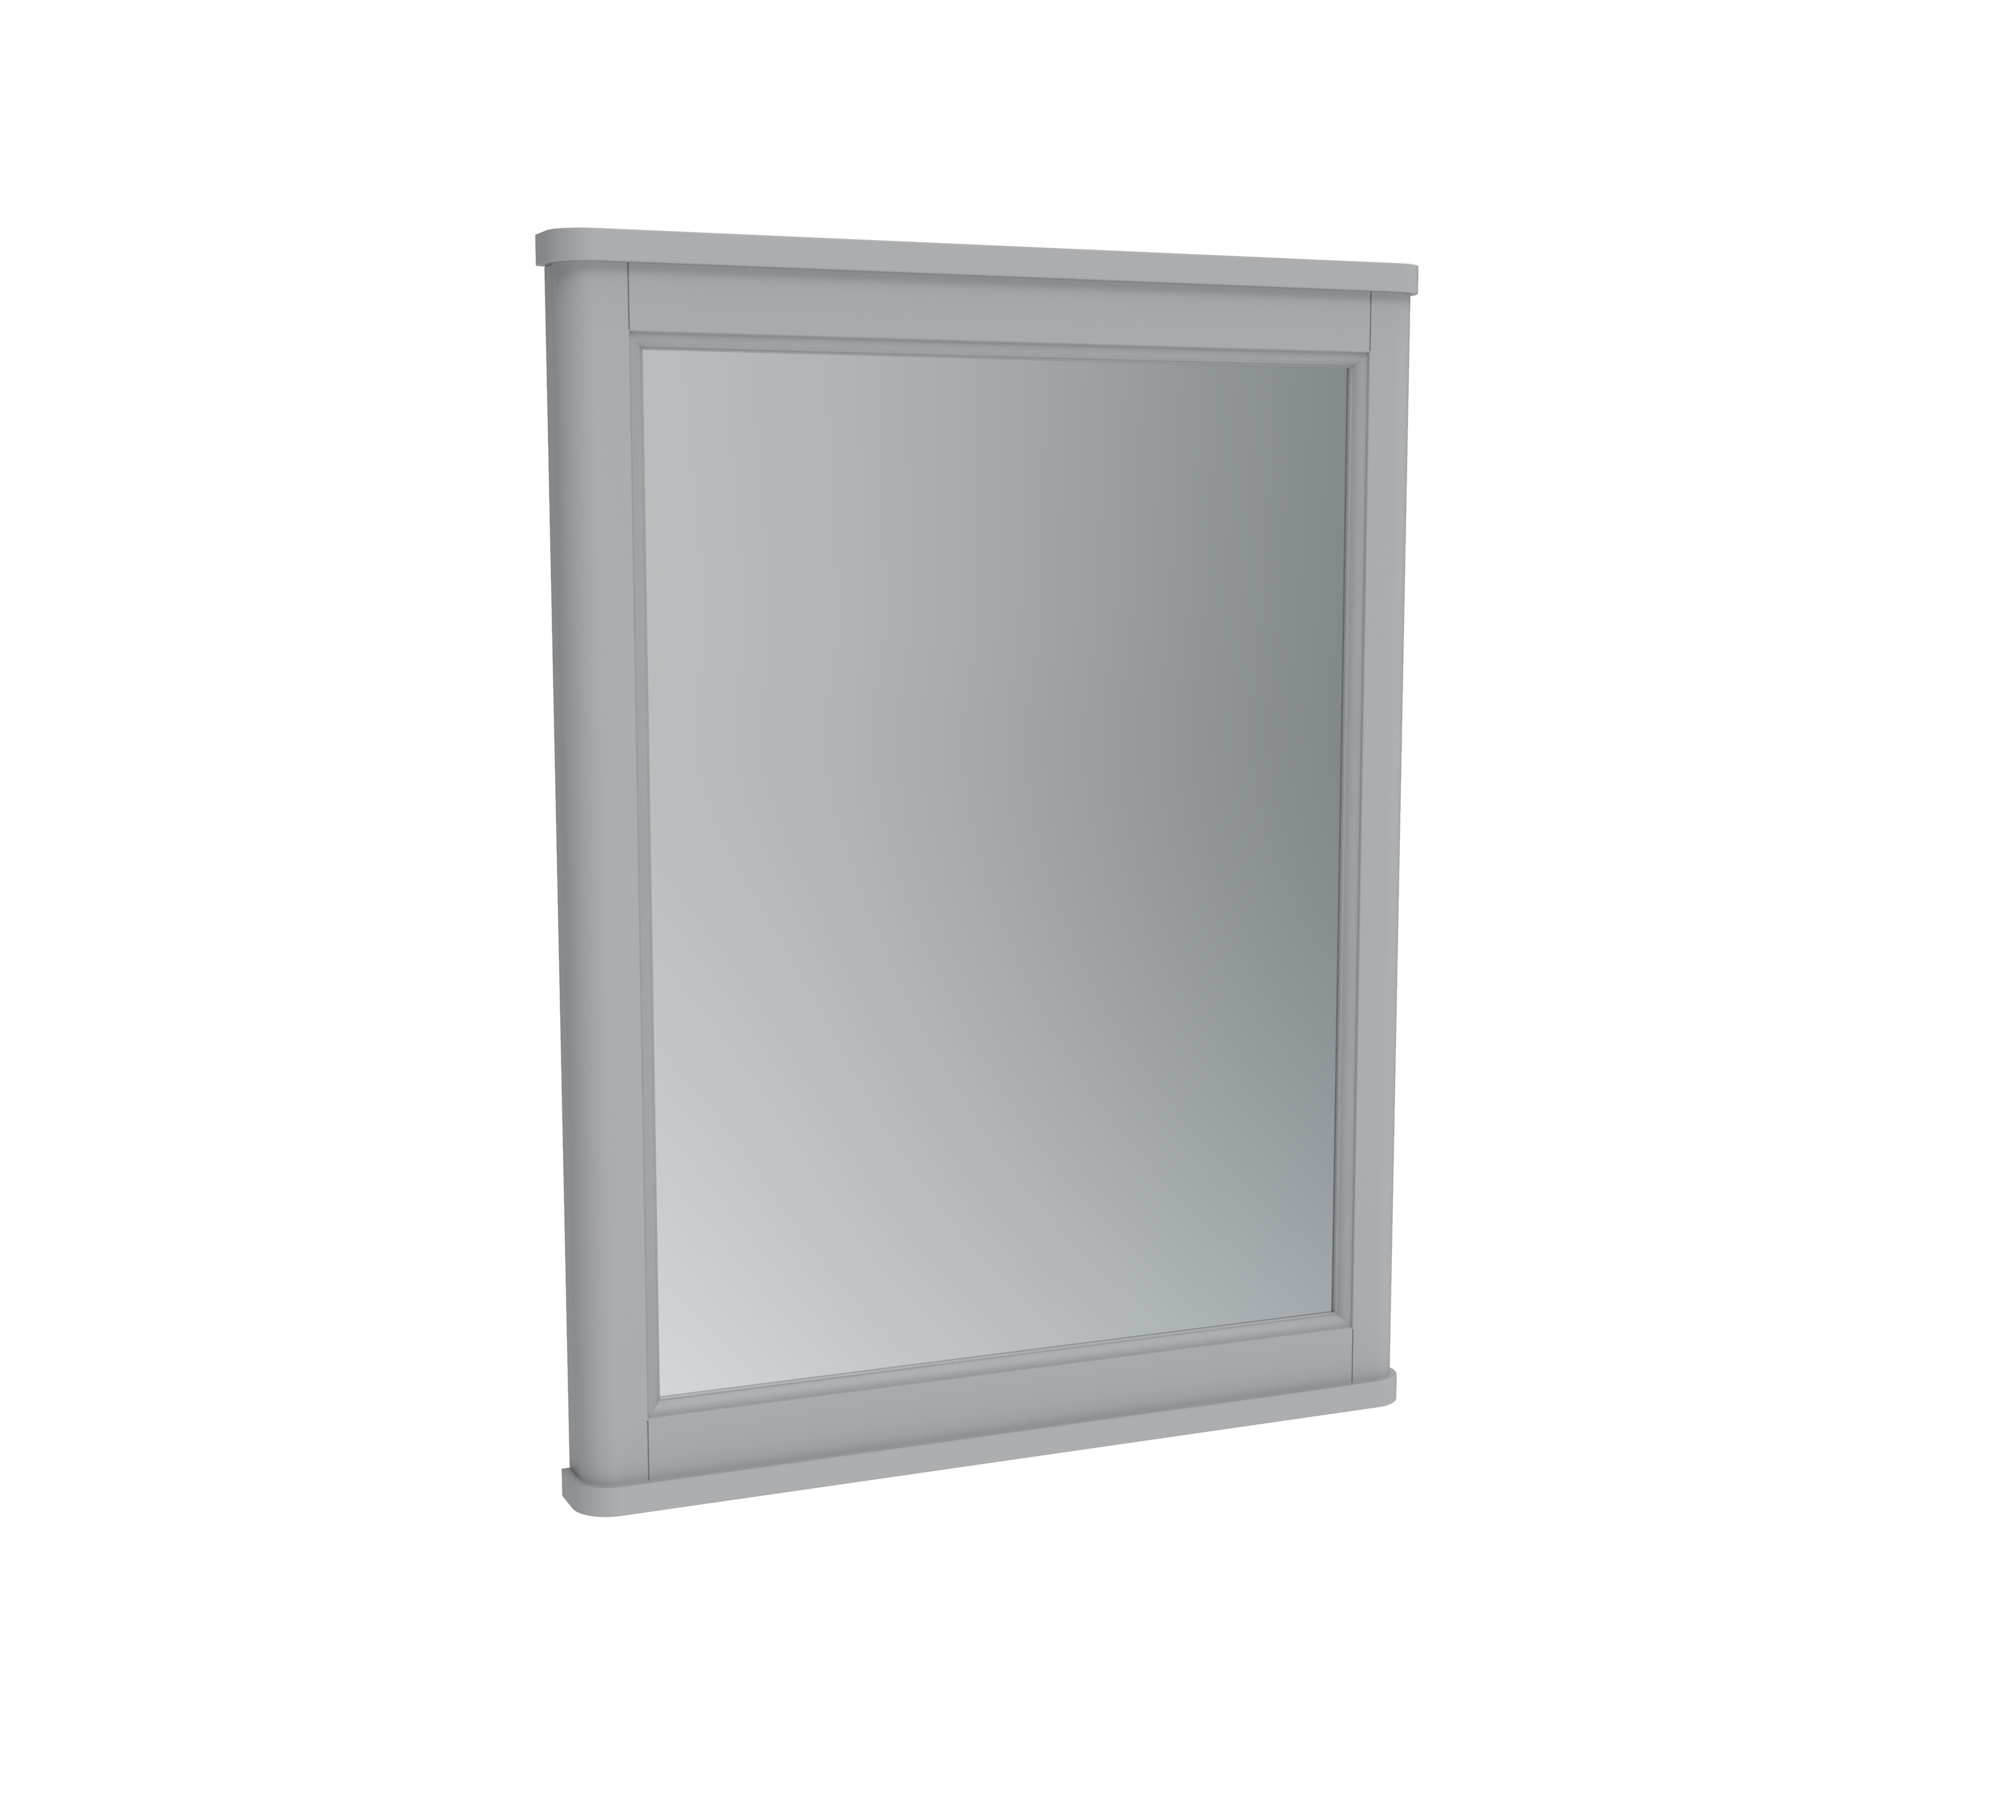 SOFIA 60cm framed mirror - Dove Grey